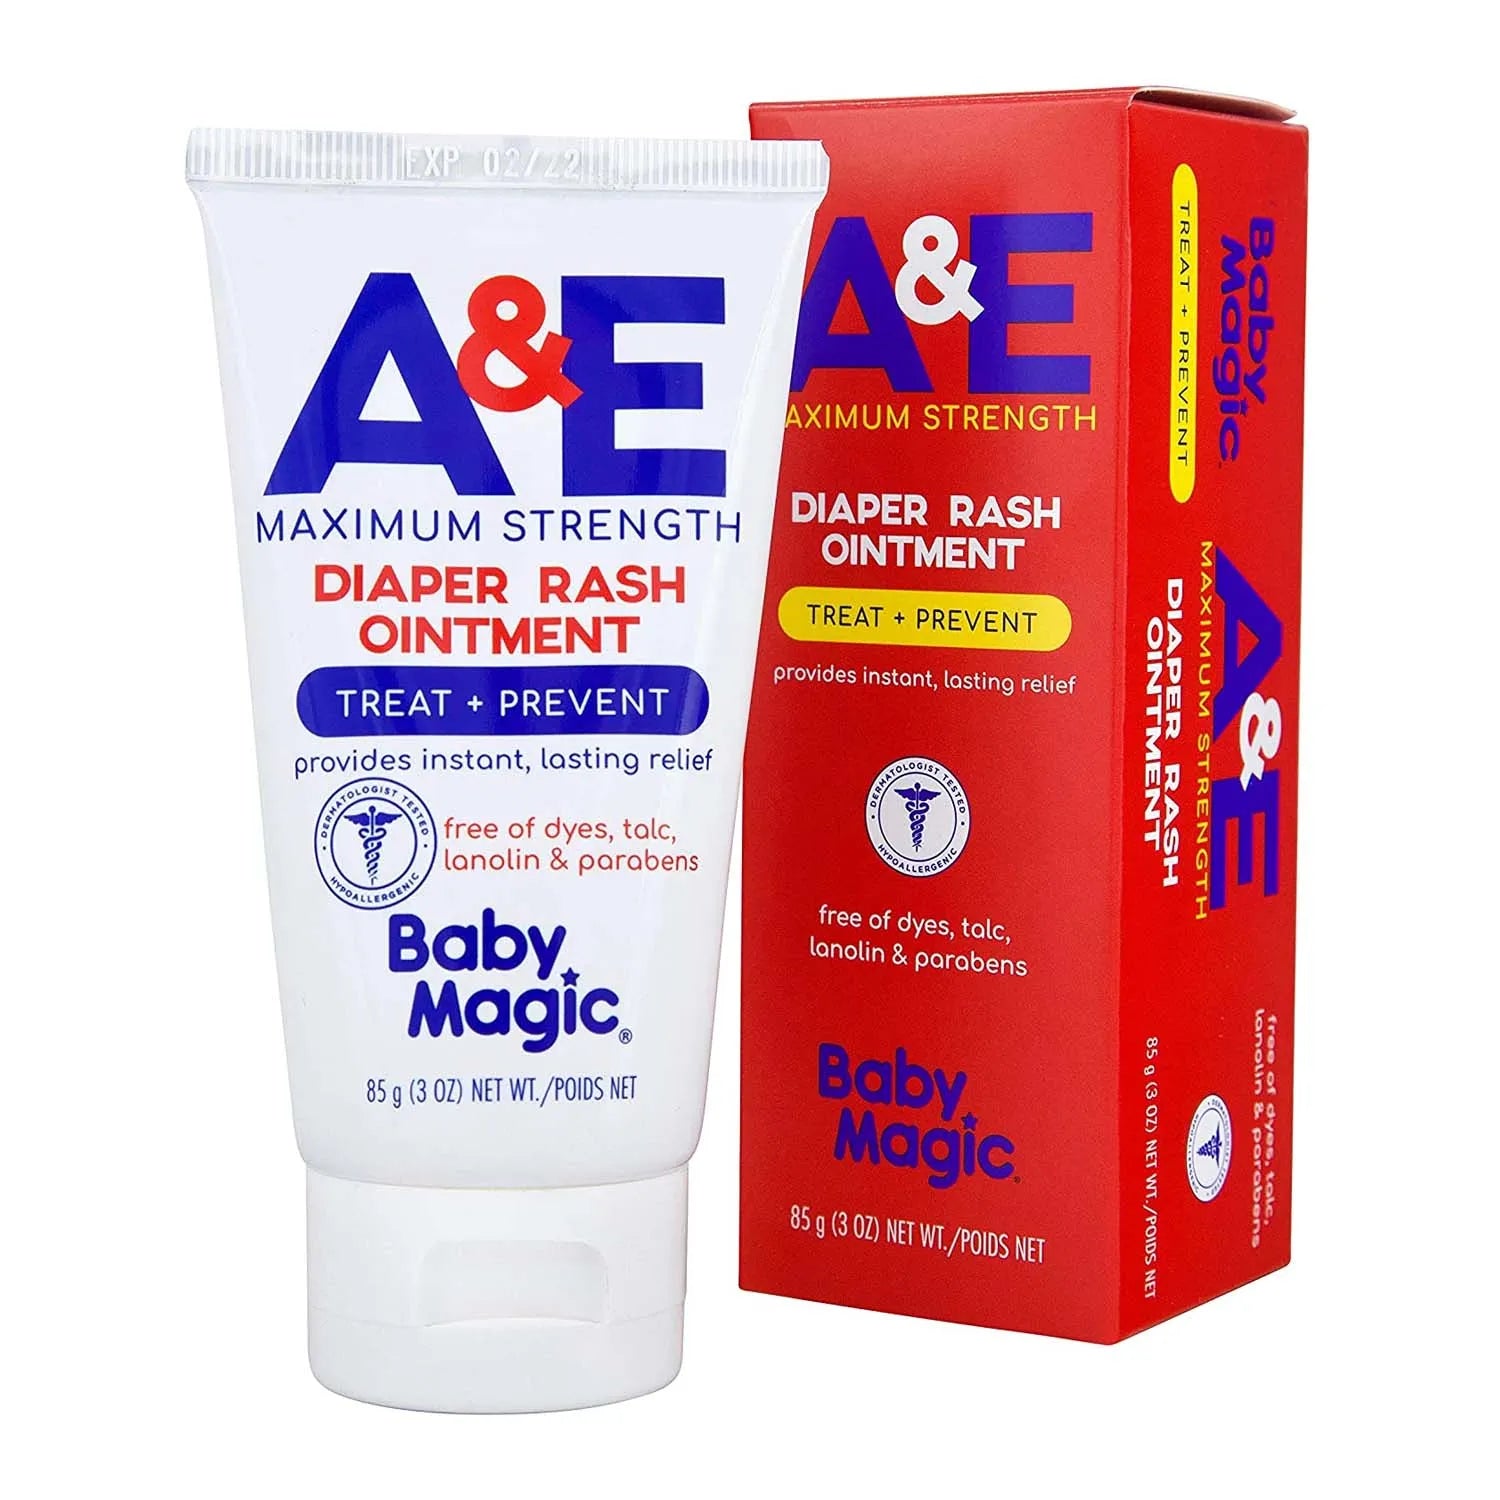 Baby Magic - A&E Maximum Strength Diaper Rash Ointment - 85g